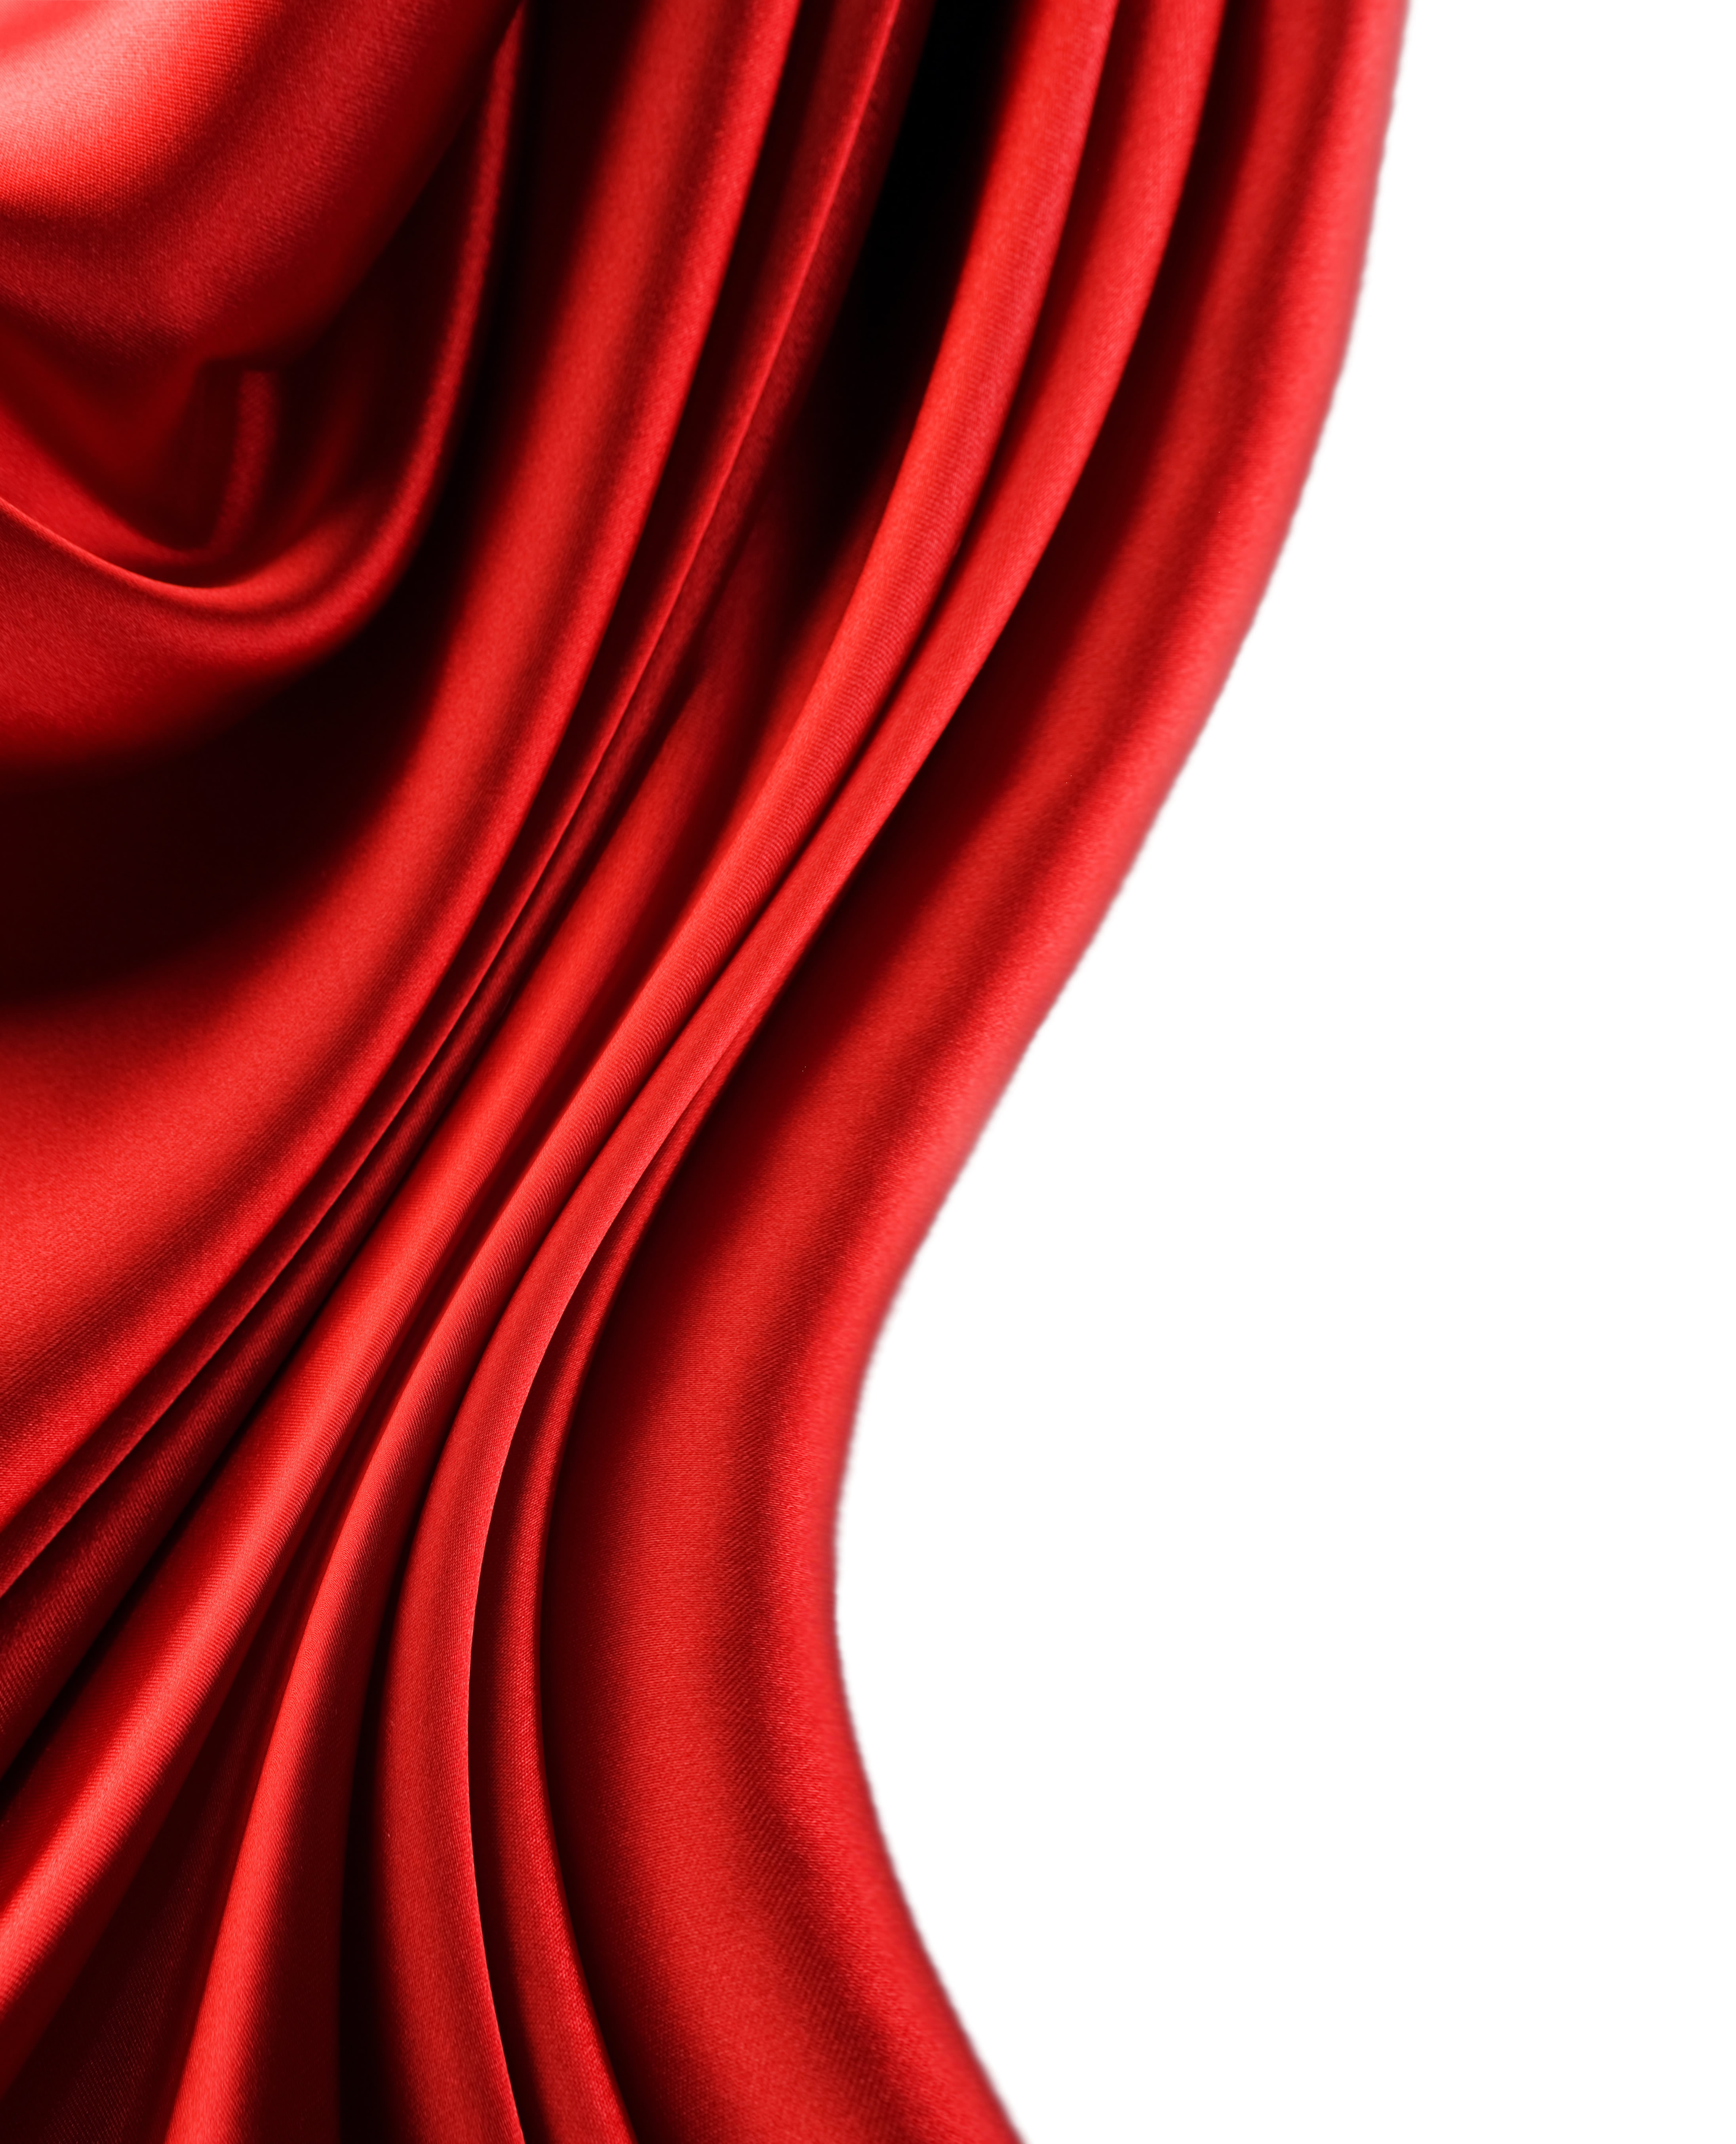 Cloth Background Silk Photo Texture Red Satin